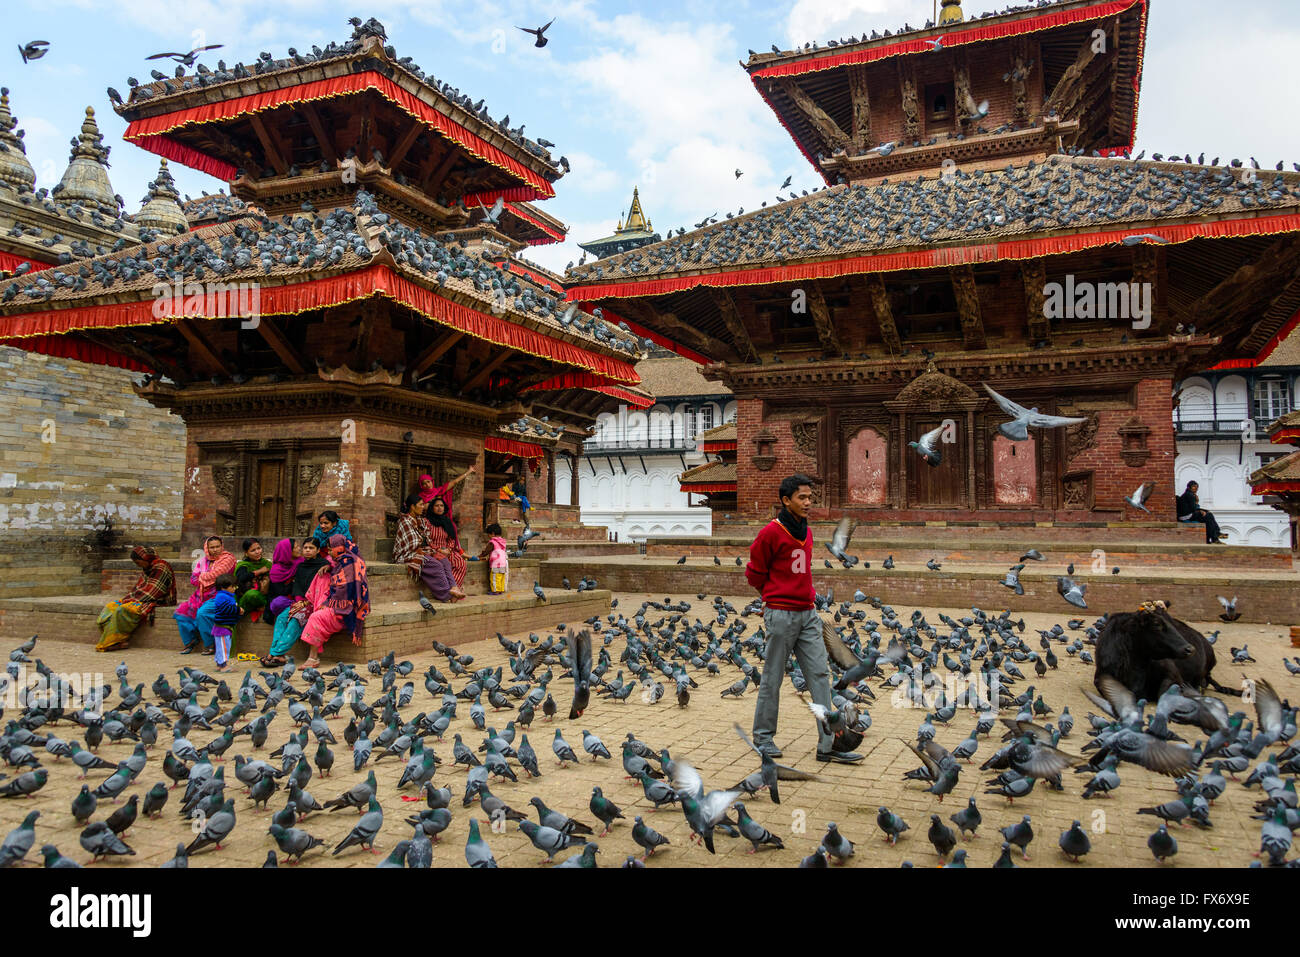 Circa November 2013 in Kathmandu, Nepal: Pigeons at Durbar Square Stock Photo